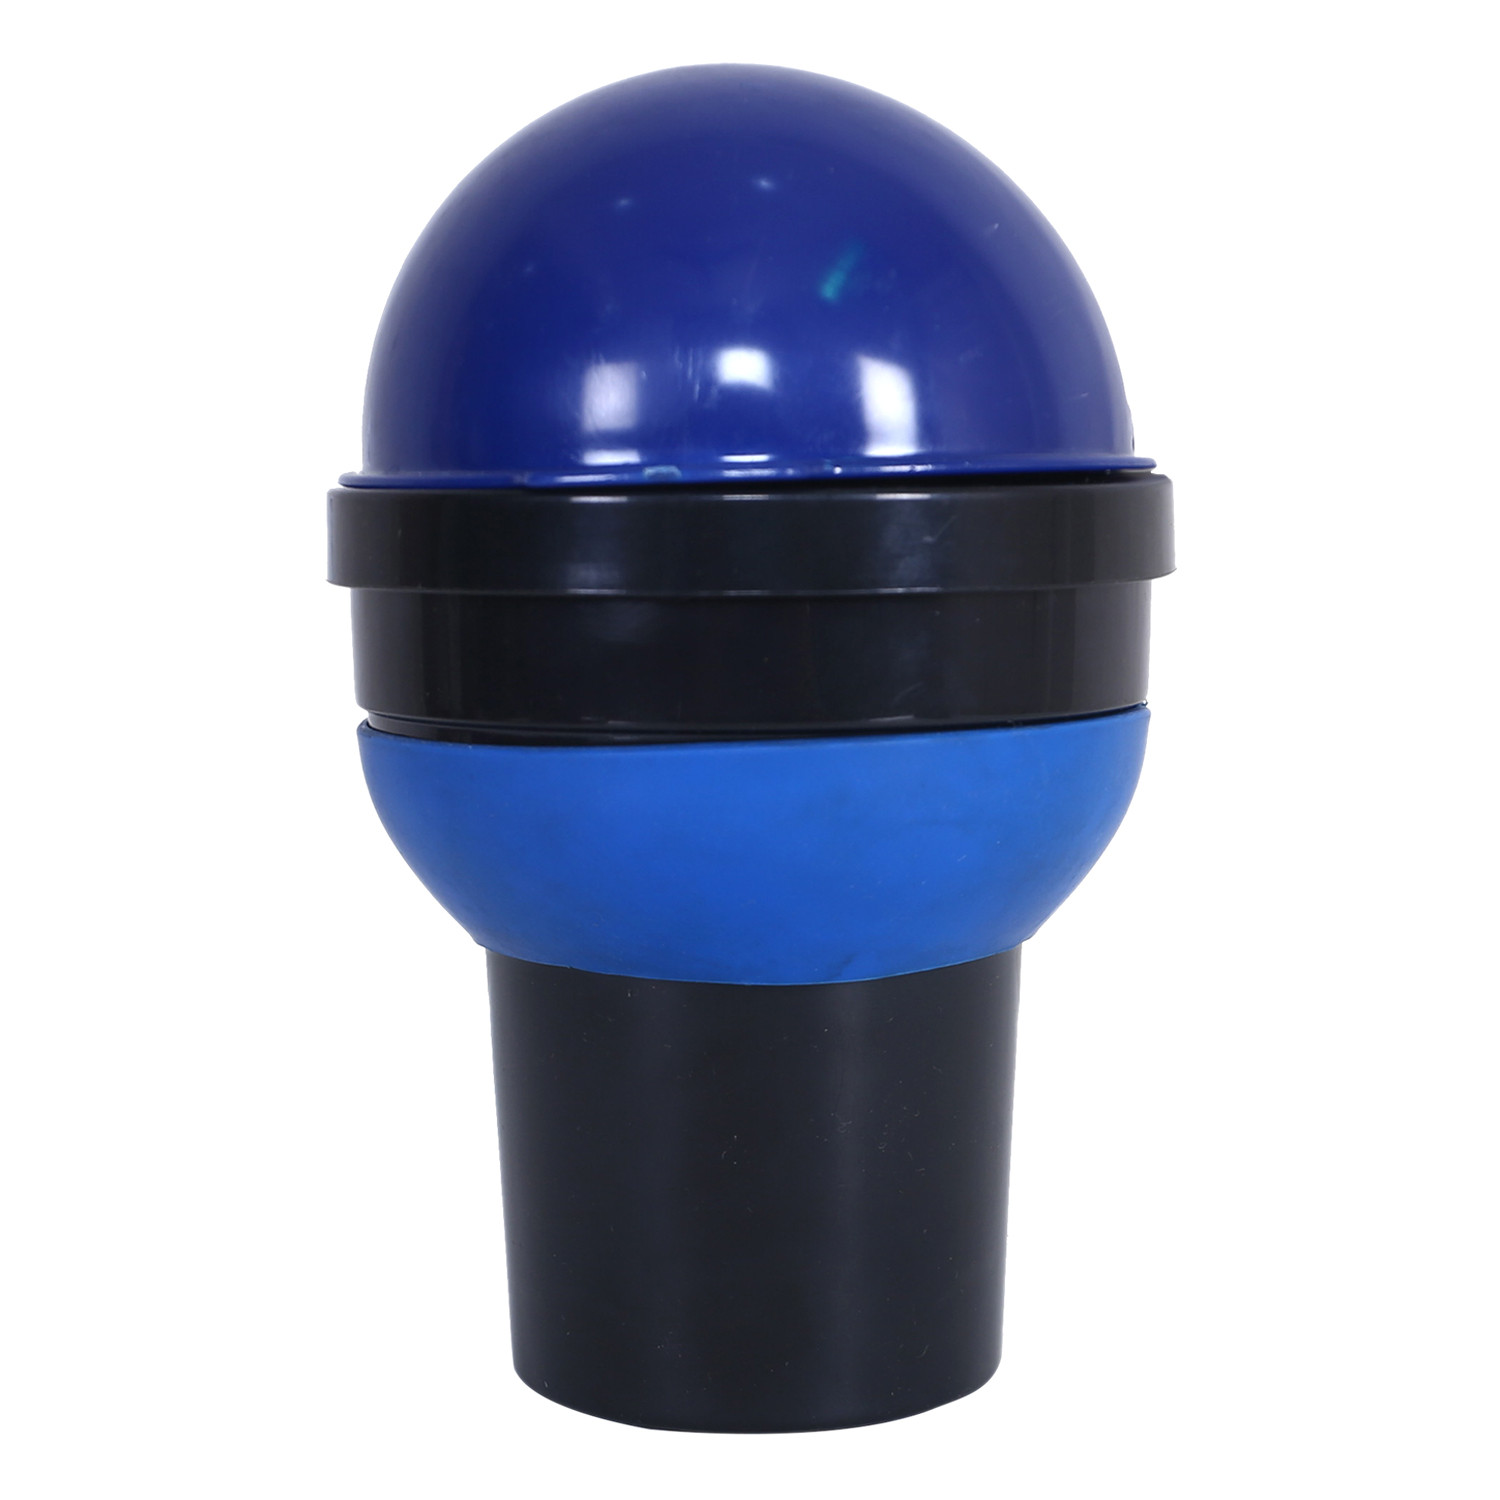 Kuber Industries Car Dustbin|Car Mini Dustbin With Lid|Leakproof Compact Small Dustbin|BLACK